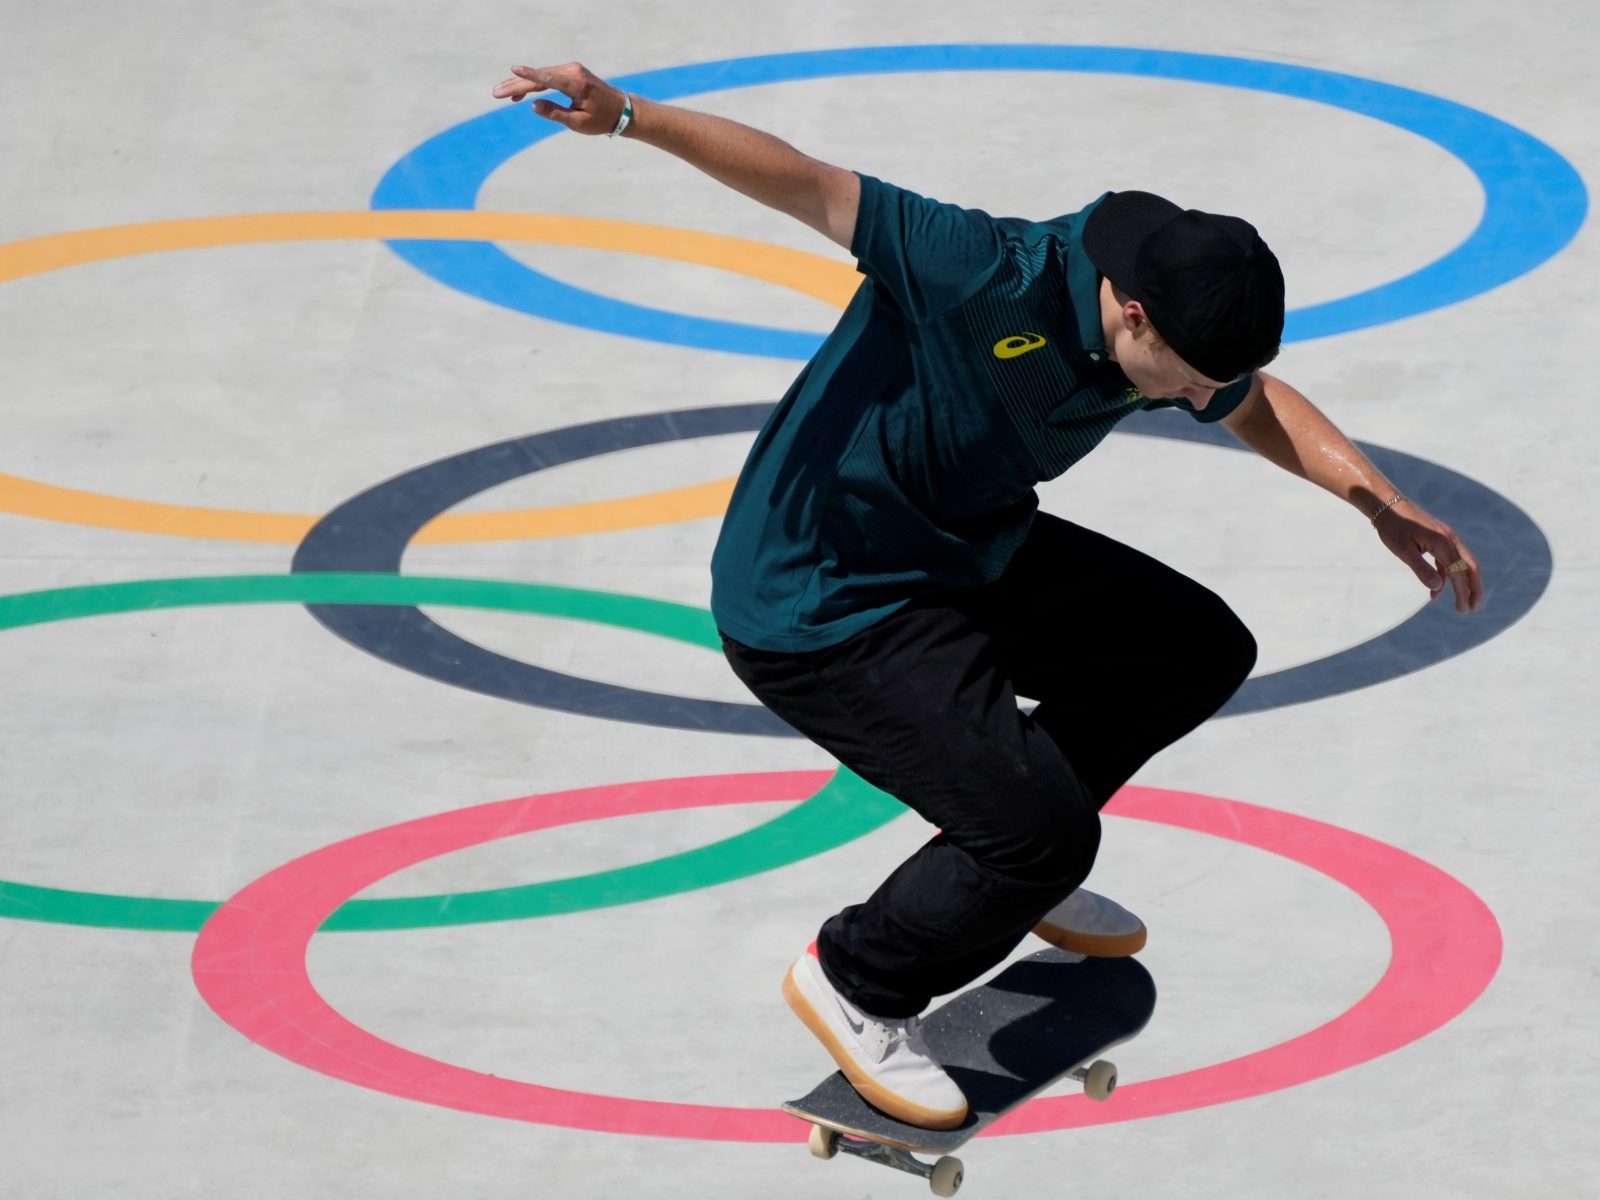 Tokyo Olympics 2020: Skateboarding to sport climbing, a look at